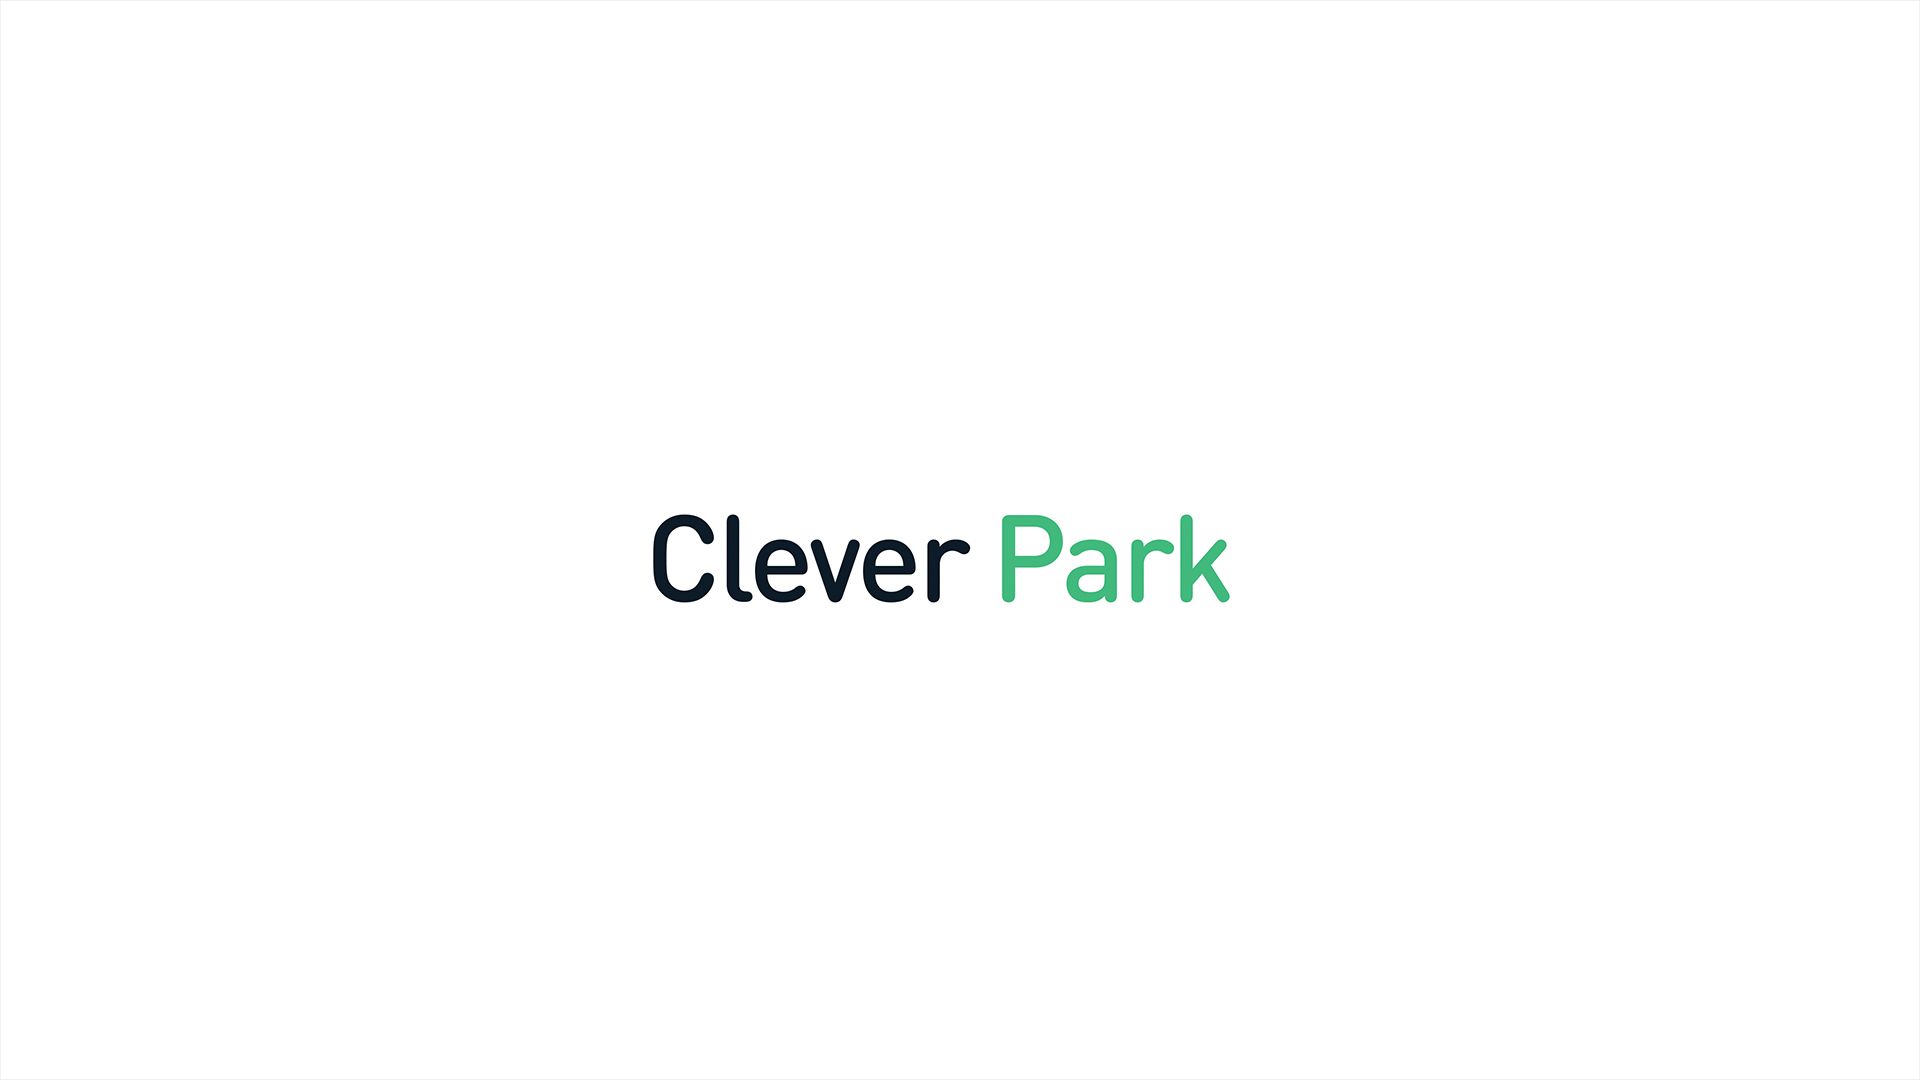 Clever Park